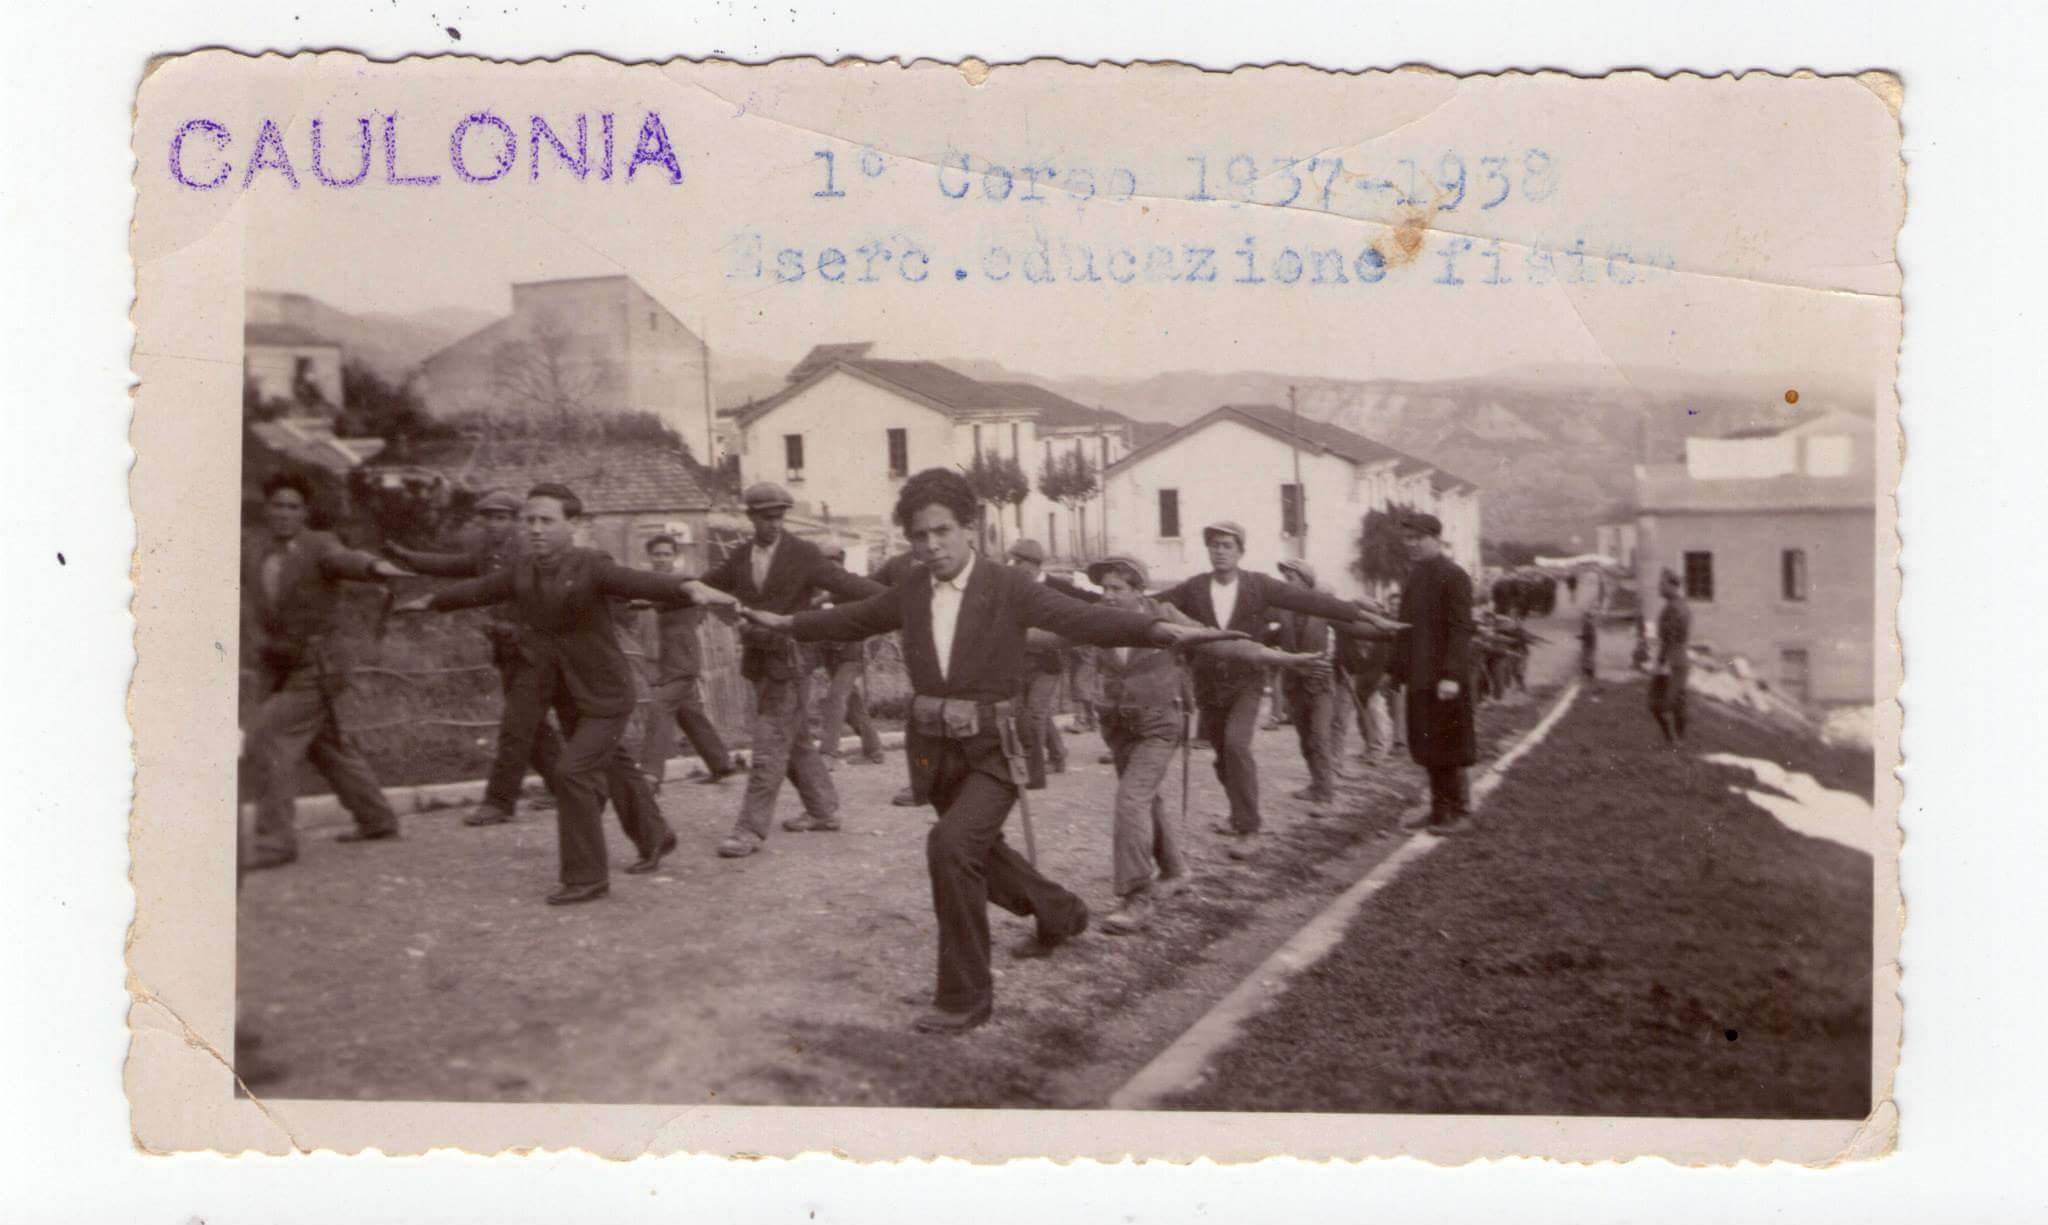 caulonia 1938